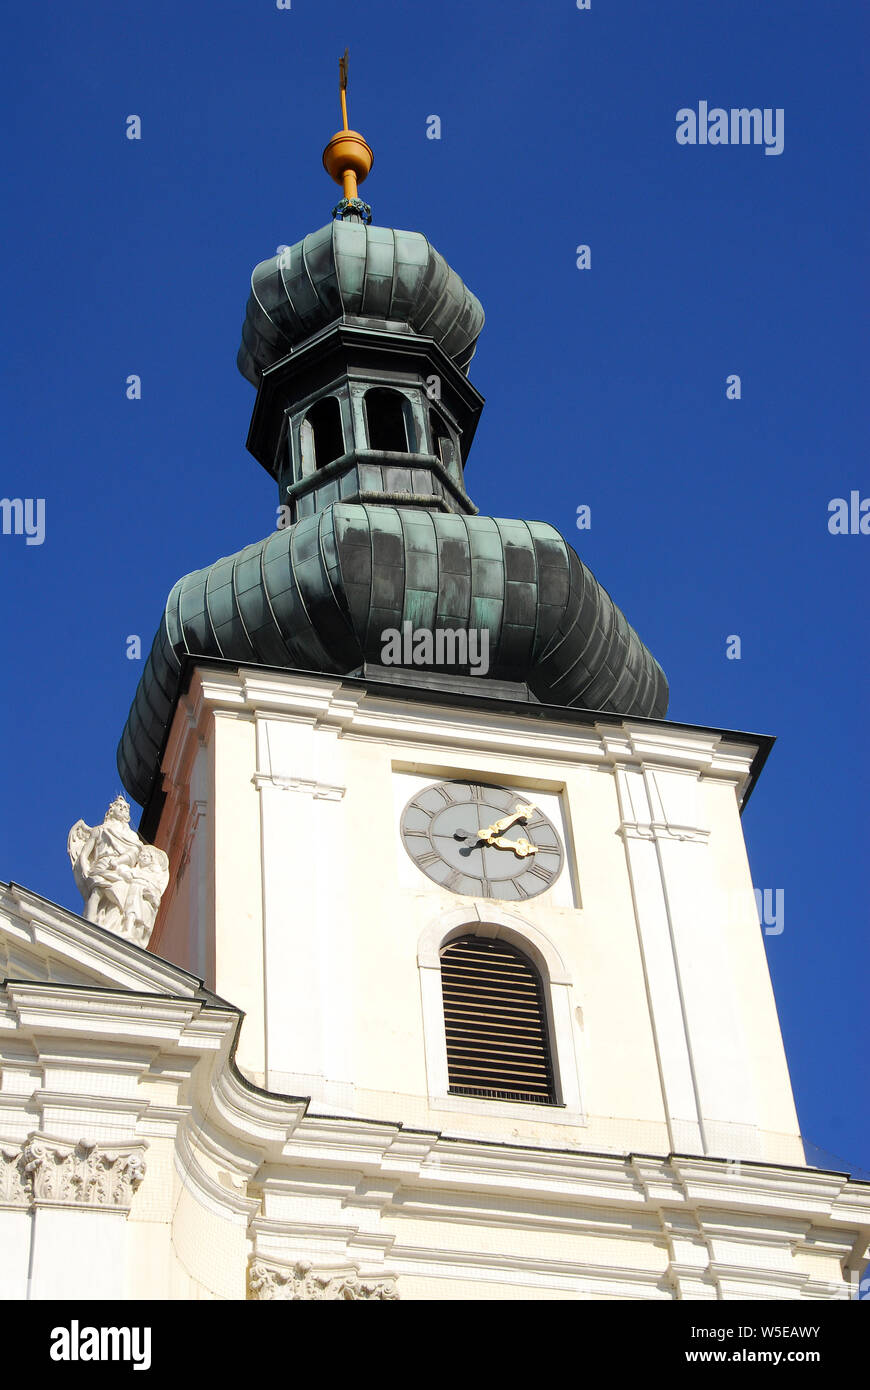 Basilica church, Frauenkirchen, Boldogasszony, Austria, Europe Stock Photo